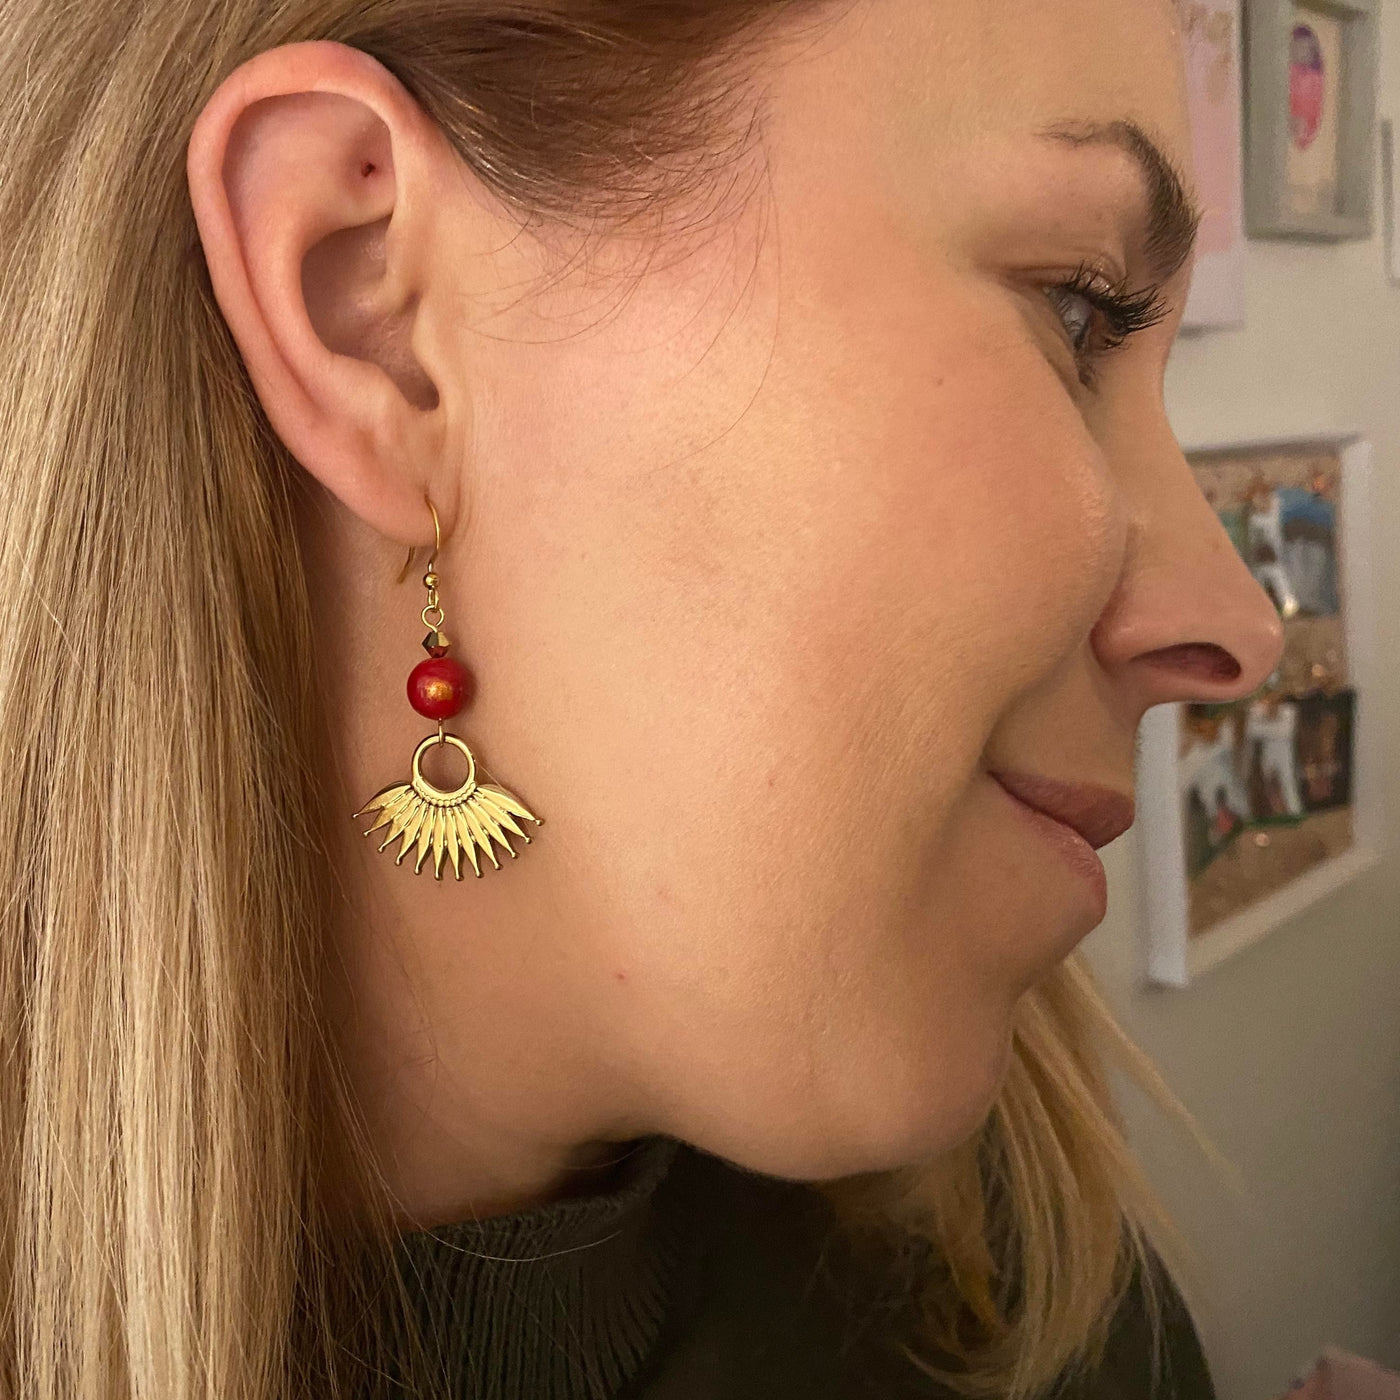 Red Panka earring